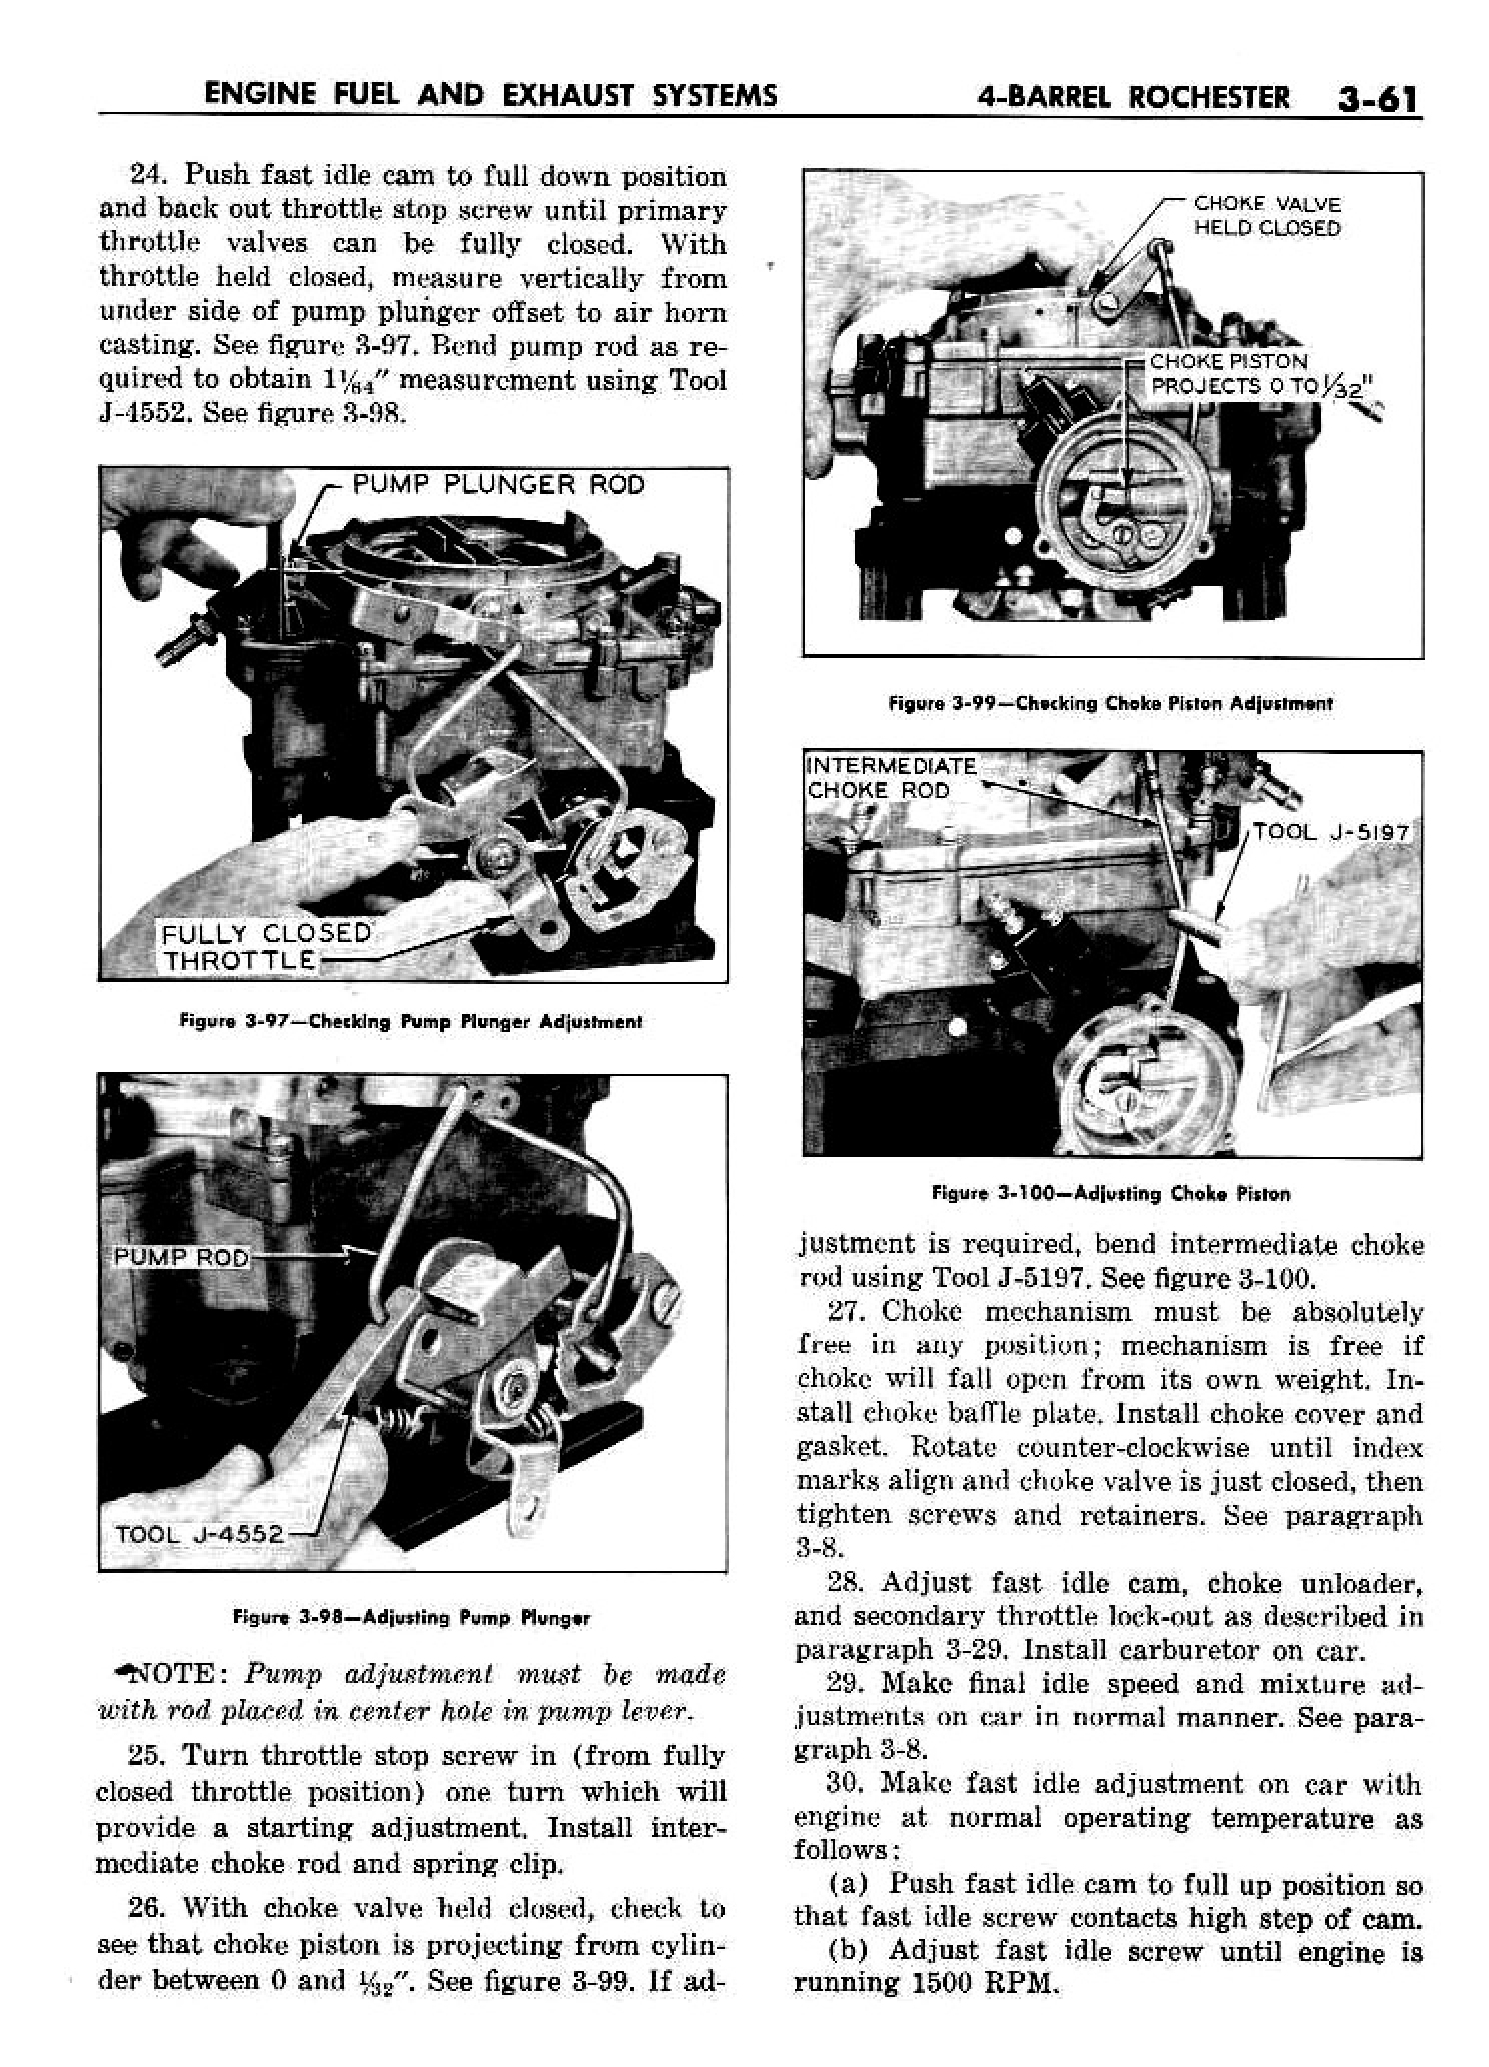 n_04 1958 Buick Shop Manual - Engine Fuel & Exhaust_61.jpg